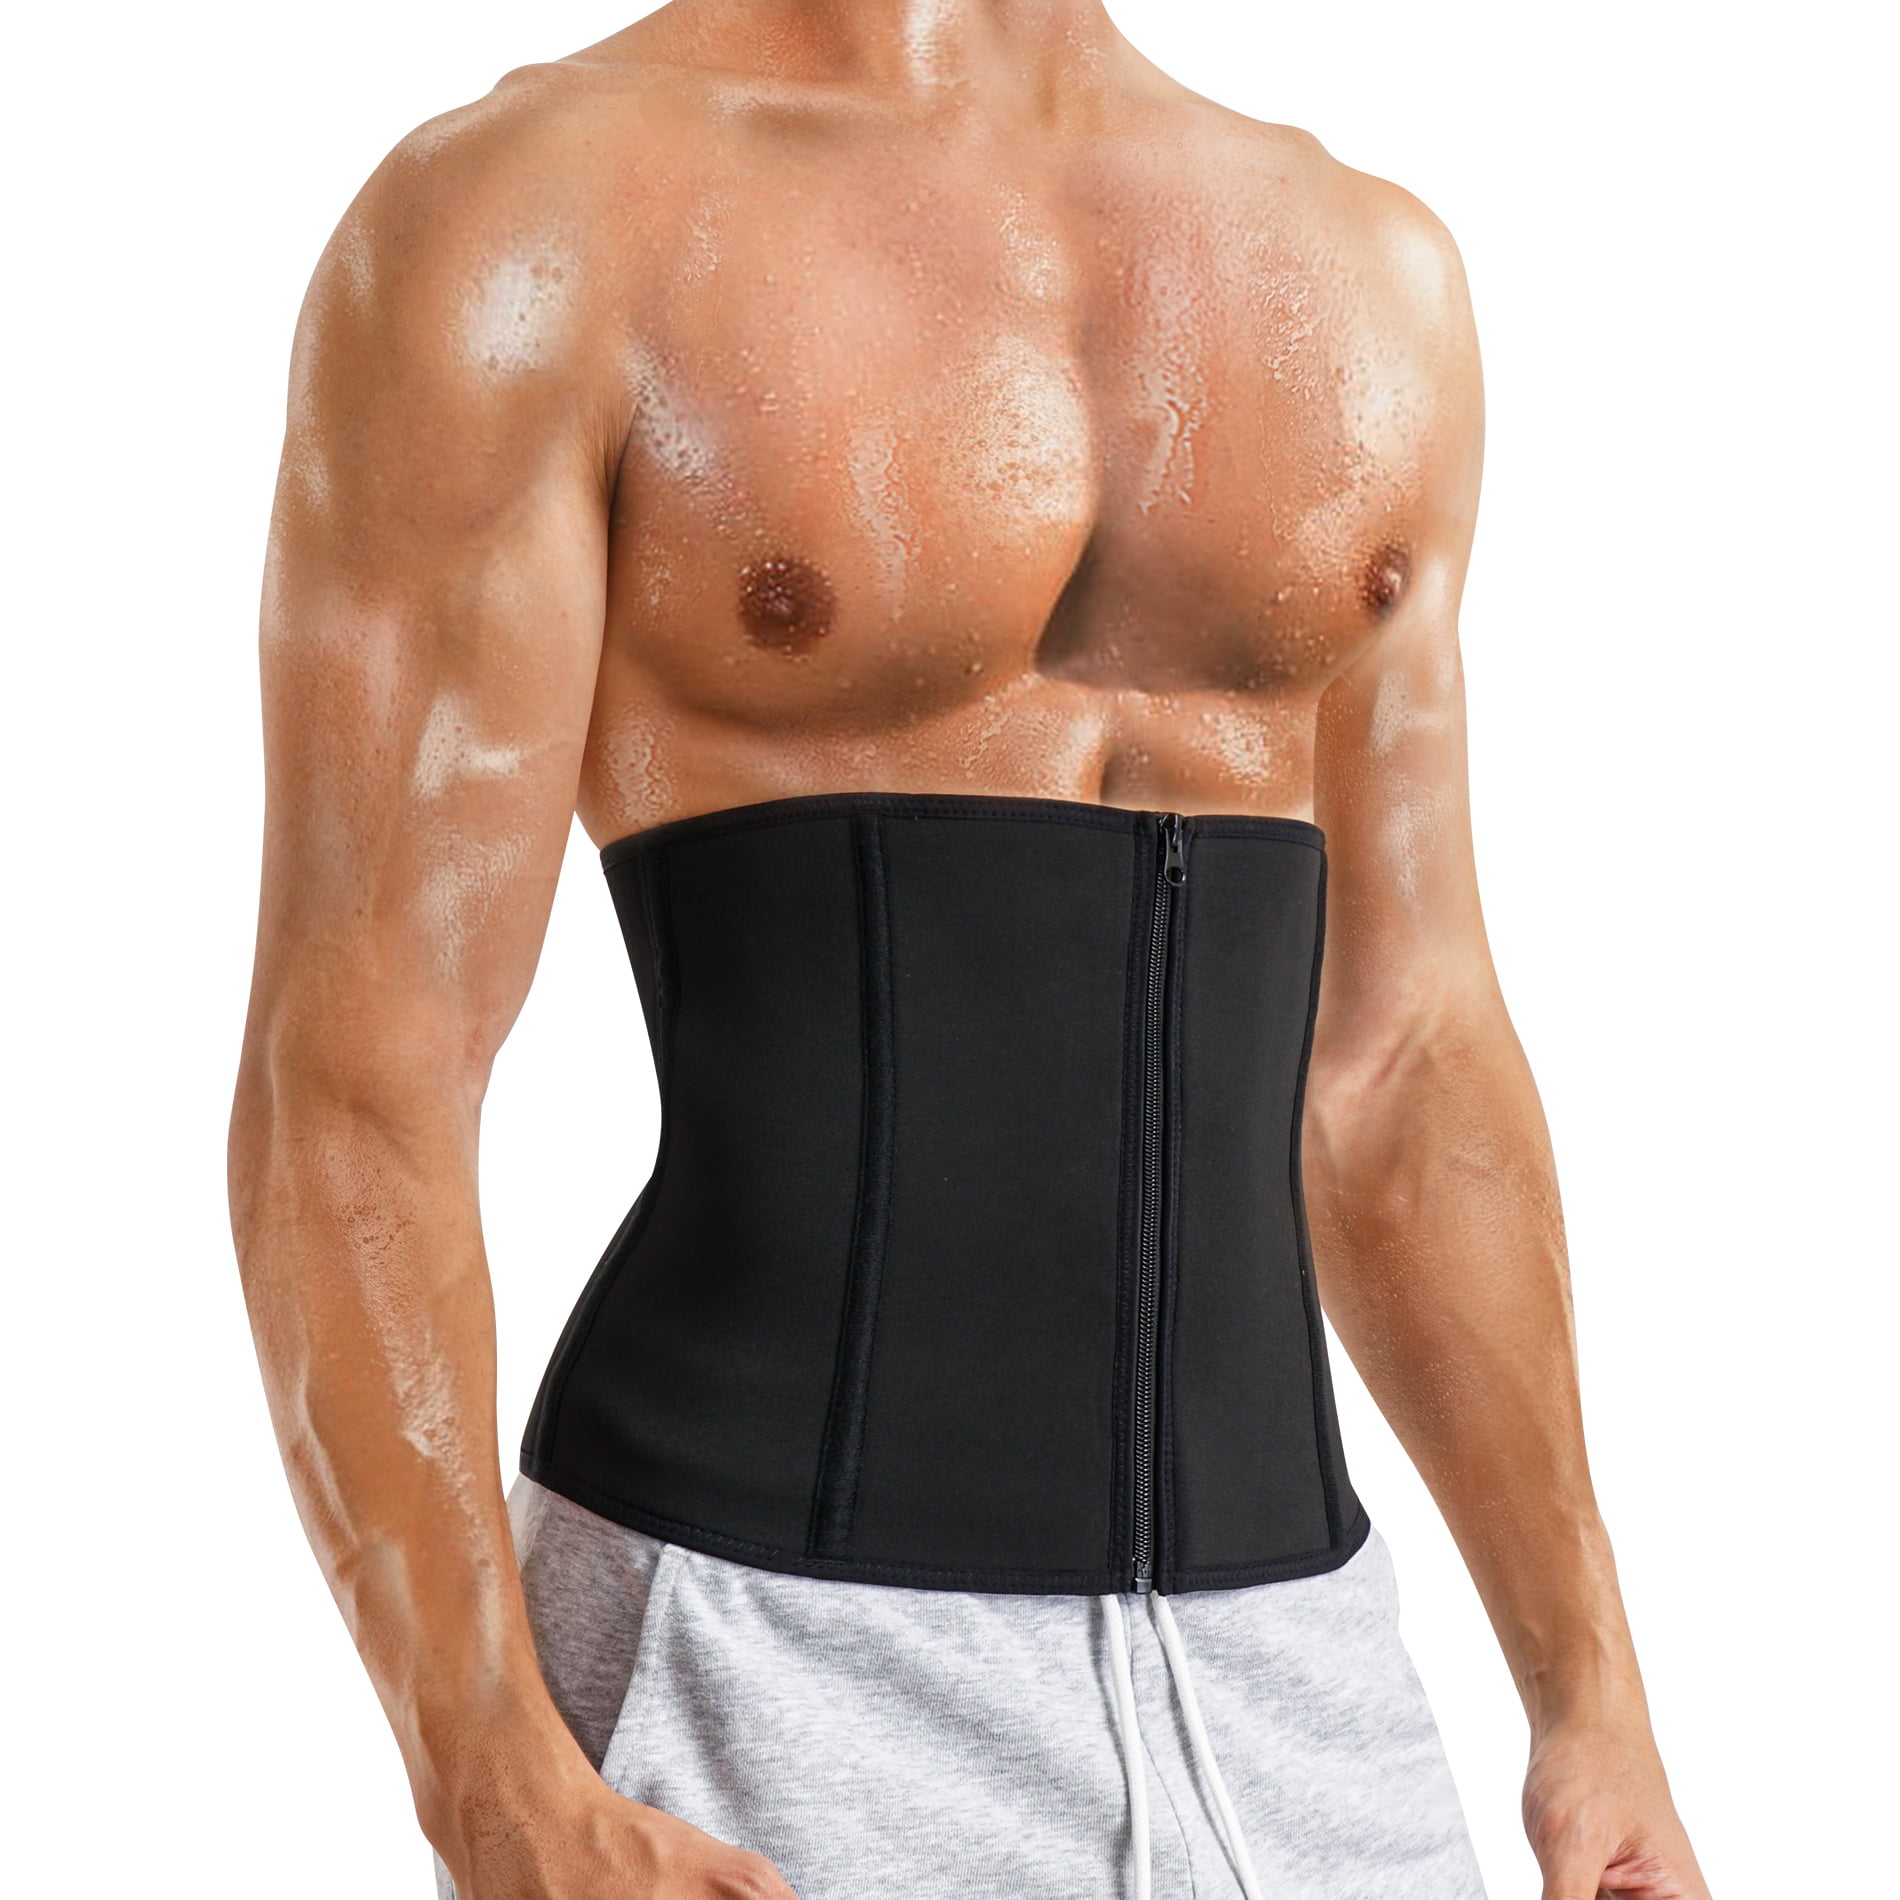 Mens Sauna Waist Trainer Vest Sweat Suit 2 Tummy Control Belly Trimmer Belts Neoprene Workout Body Shaper 